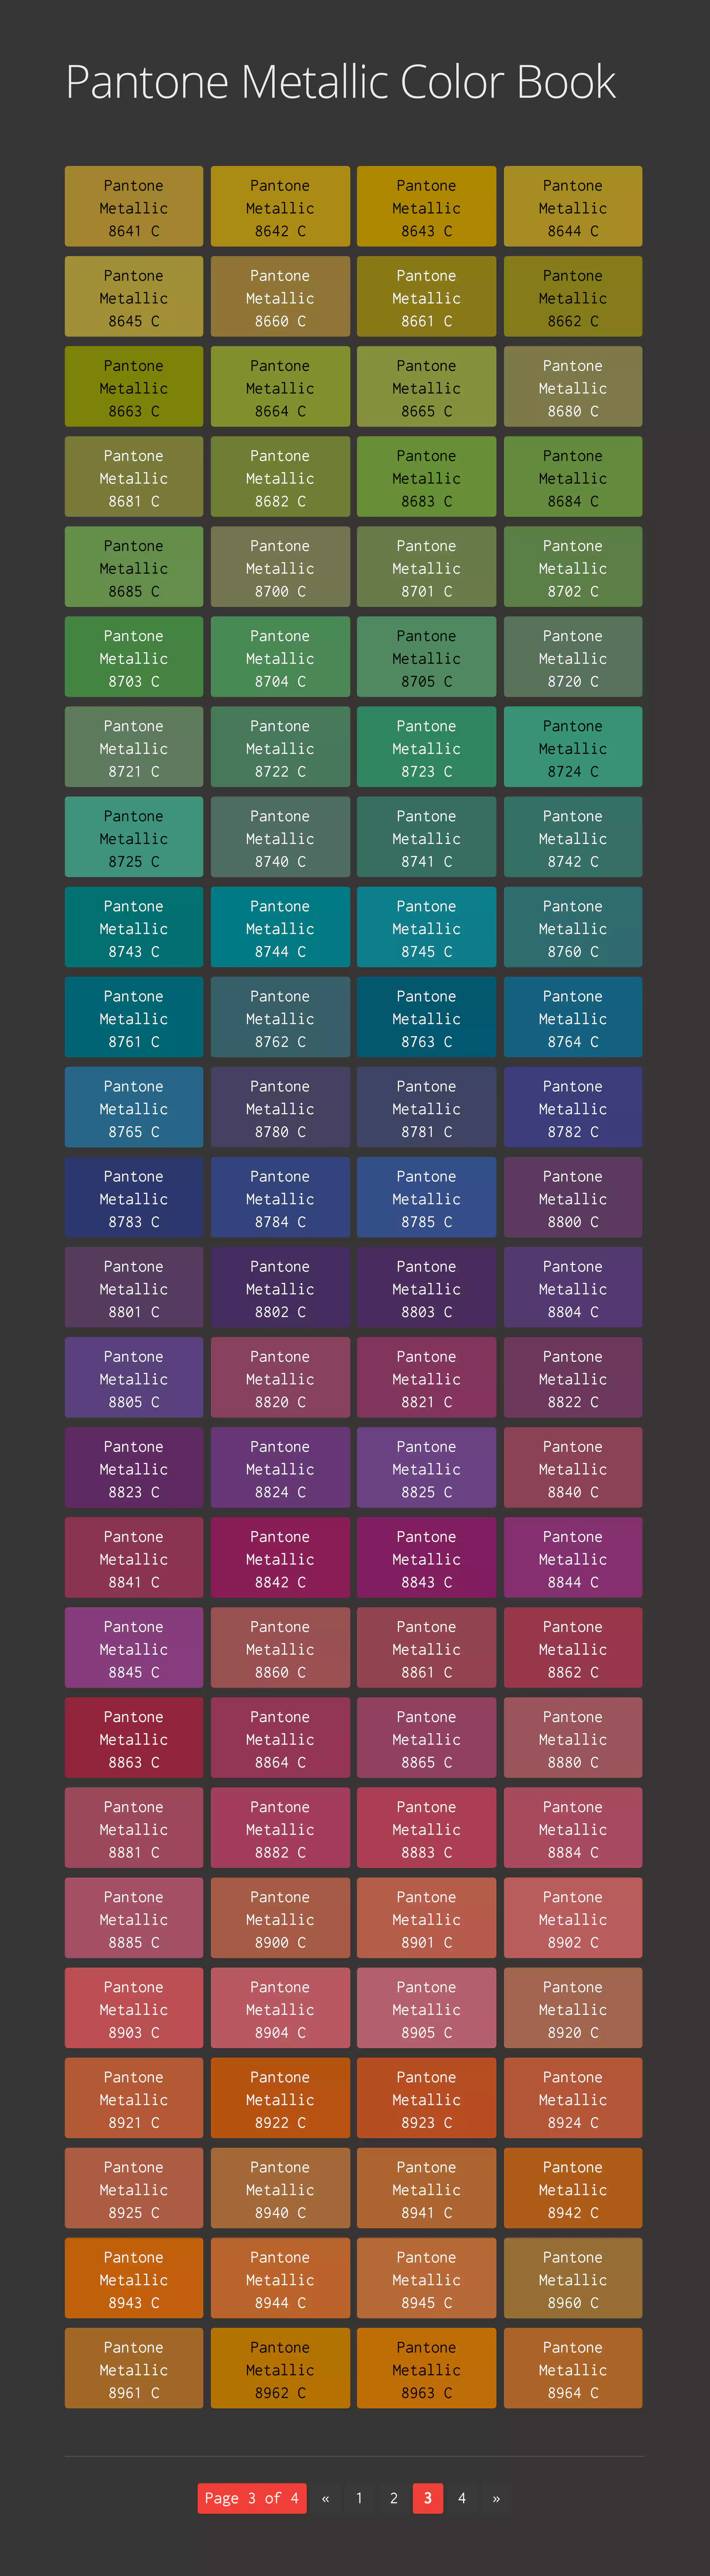 Pantone-Metallic-Color-Chart-3